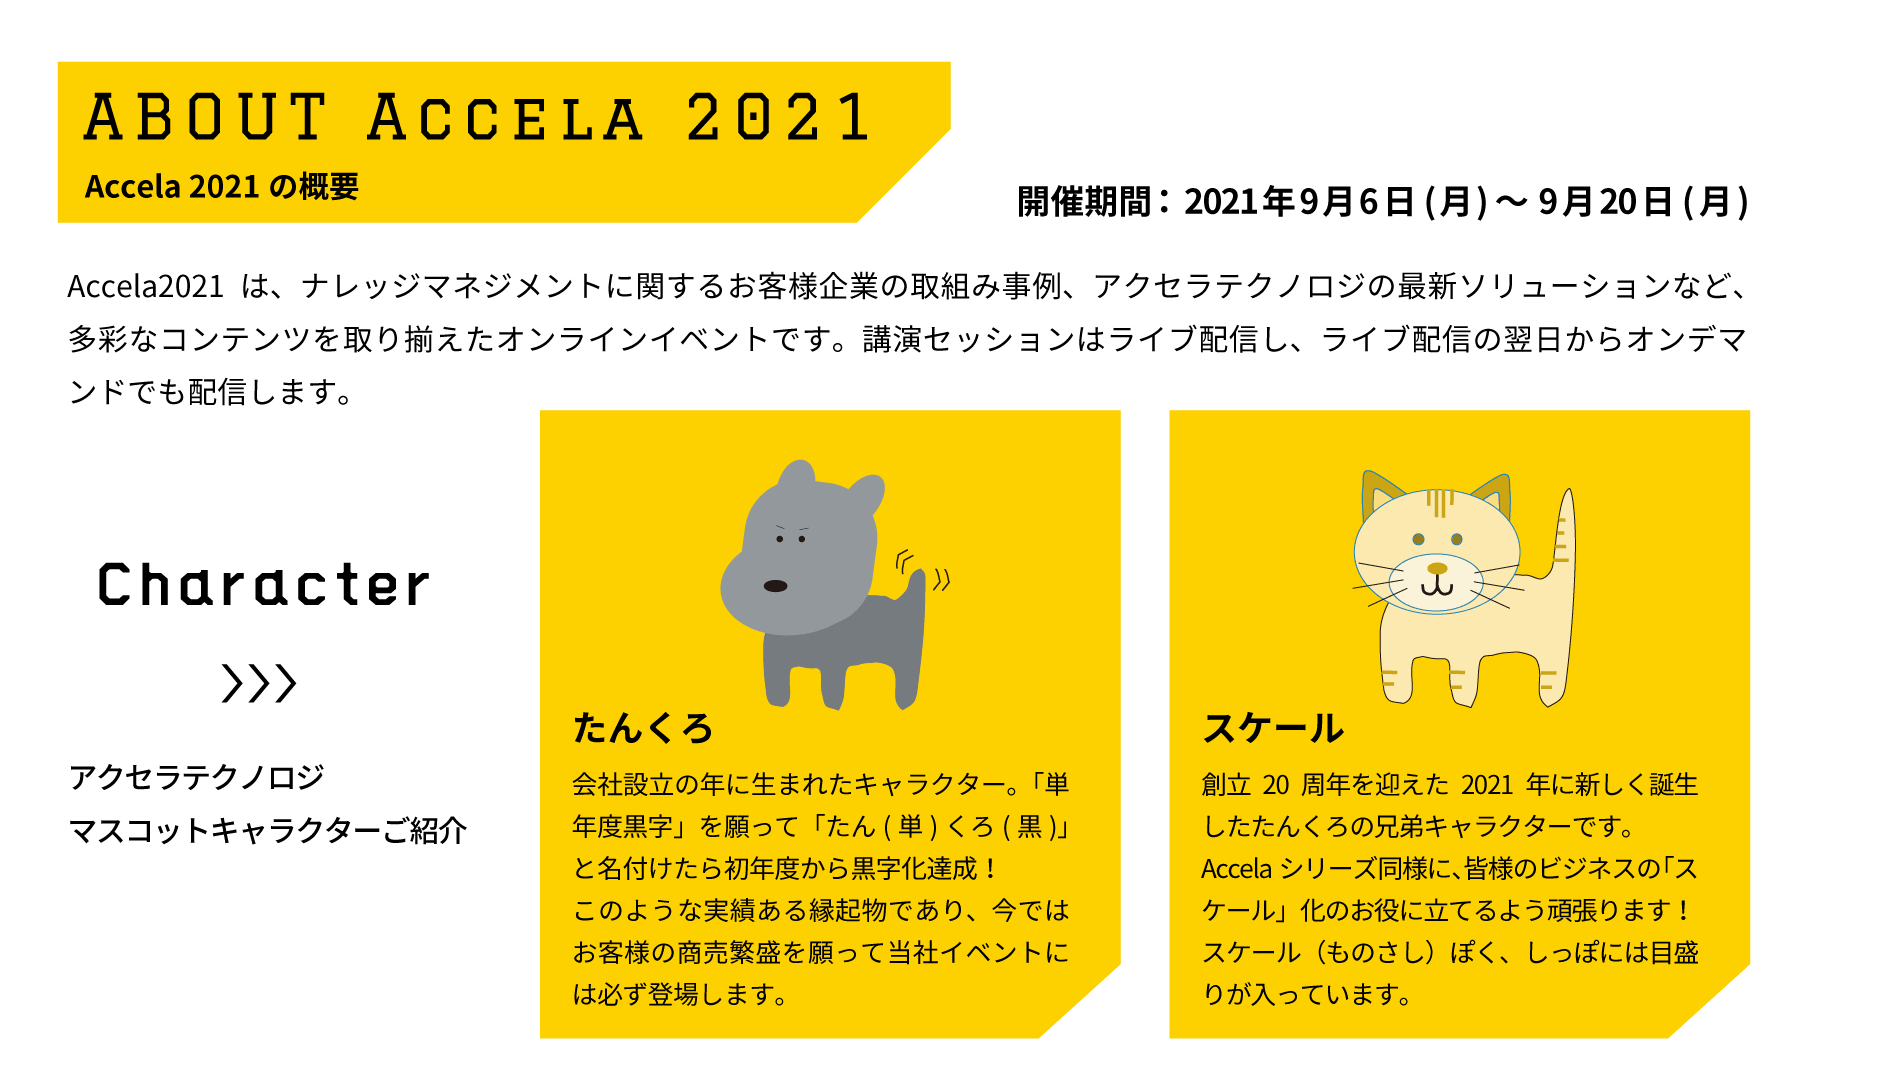 Accela2021の概要